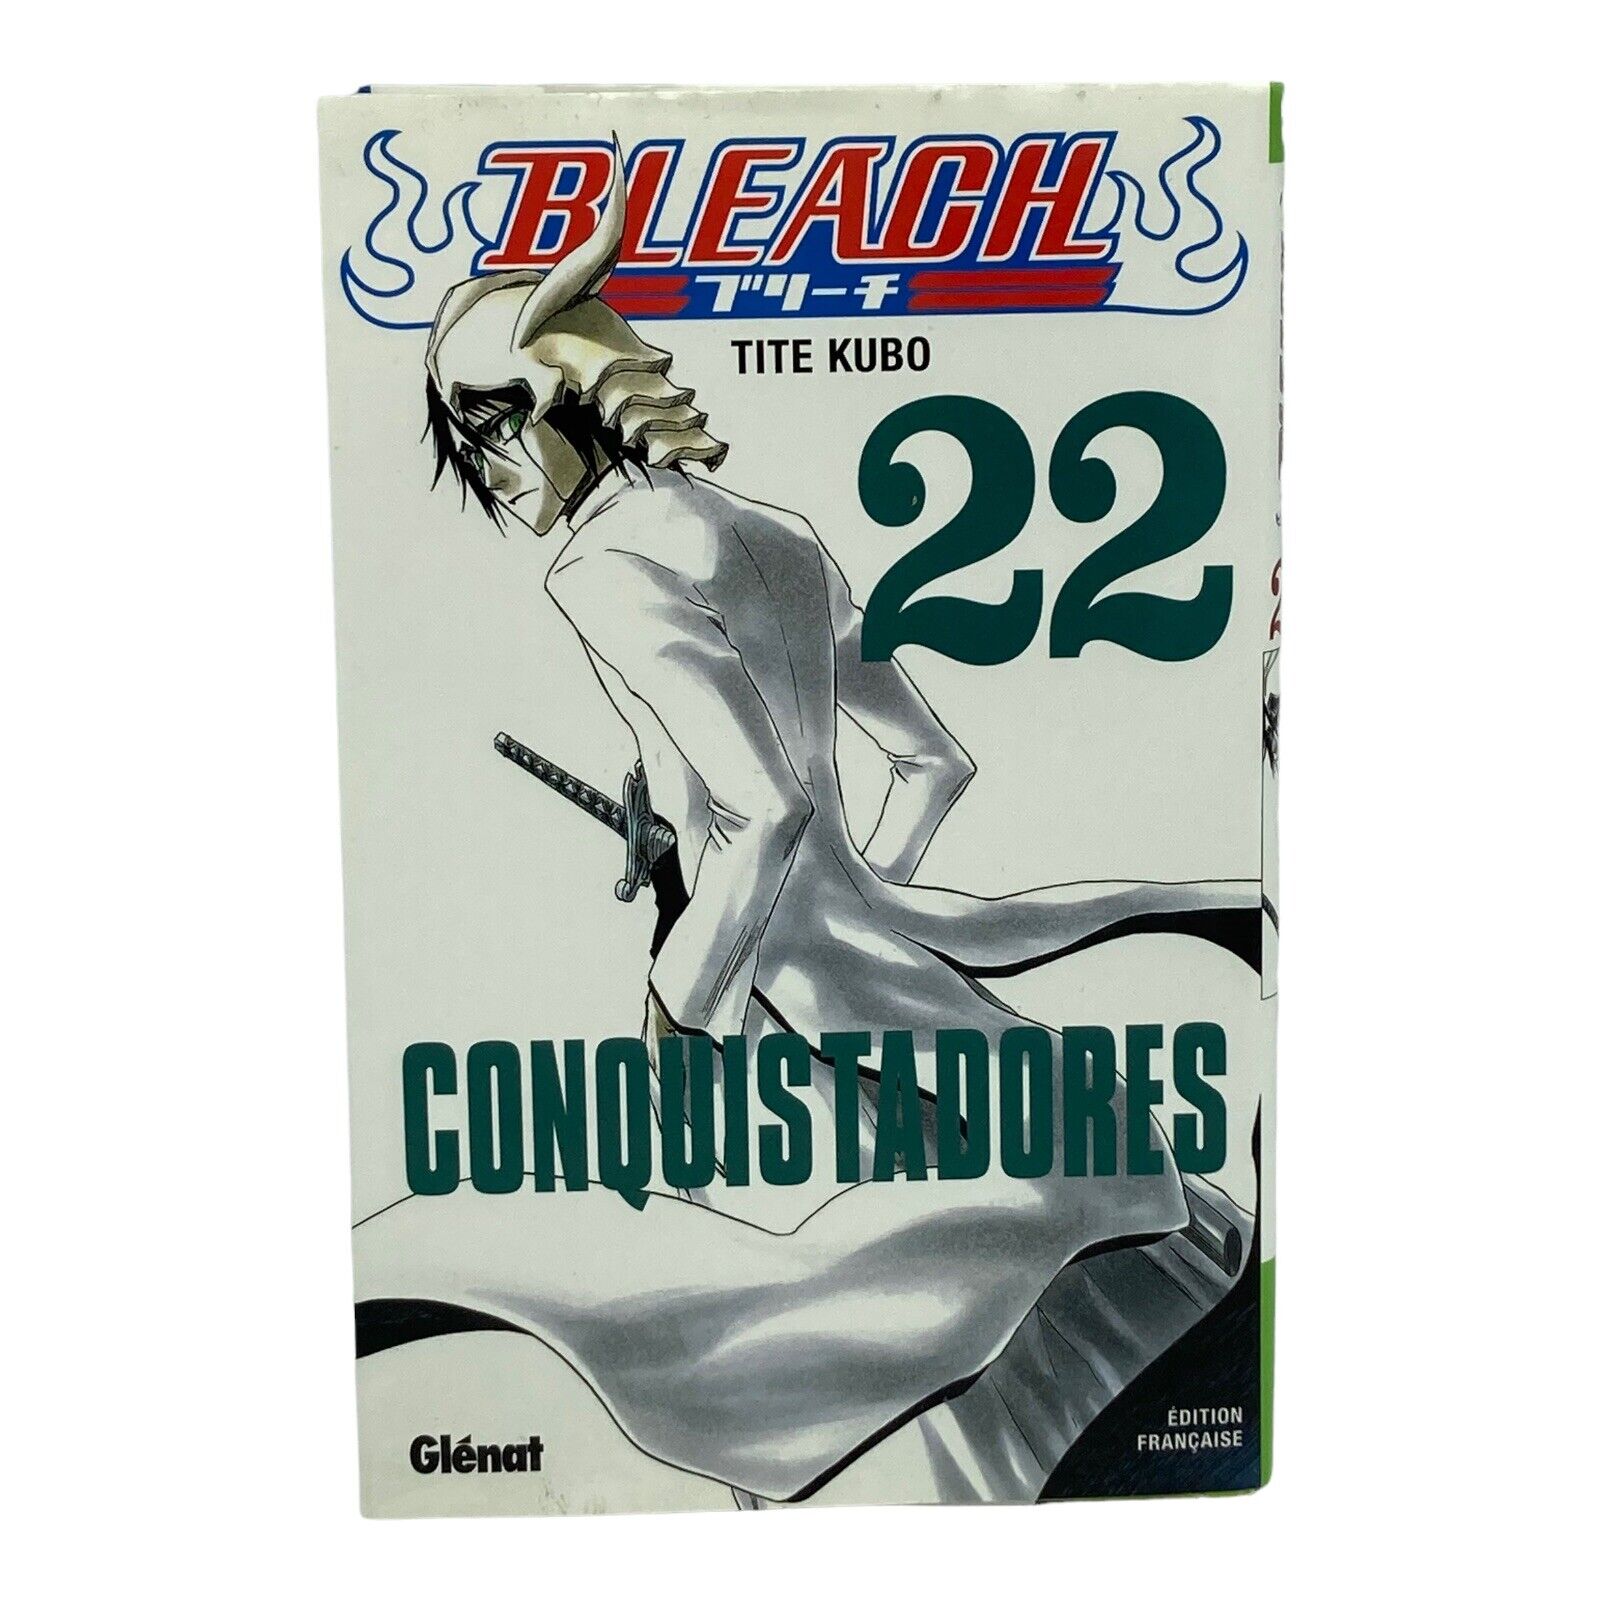 Bleach #22 French Language Anime Manga Ichigo Sasuke Kurosaki zanpakuto Manga